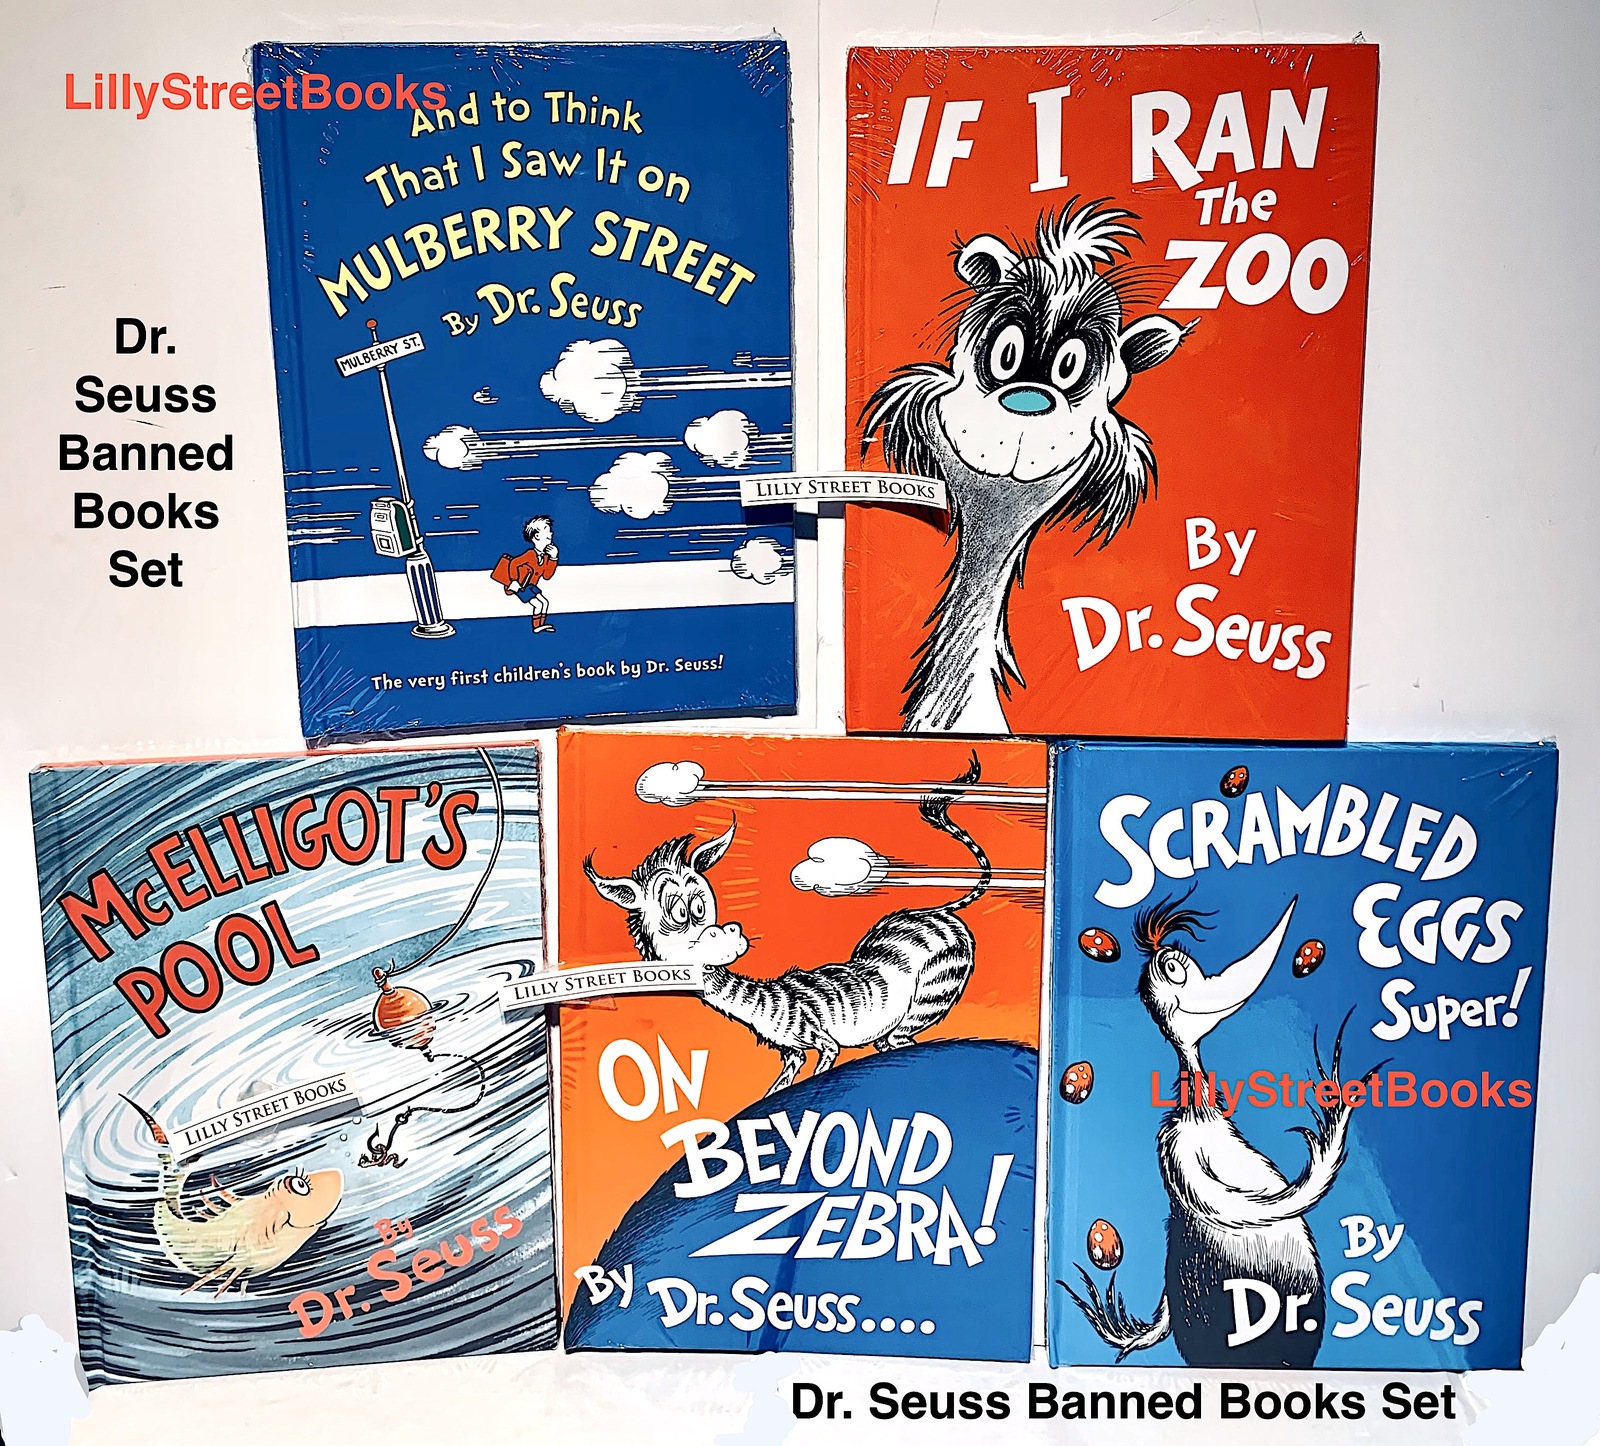 5 Dr. Seuss Children's Books only $5.95 Shipped! ($1.20 Each